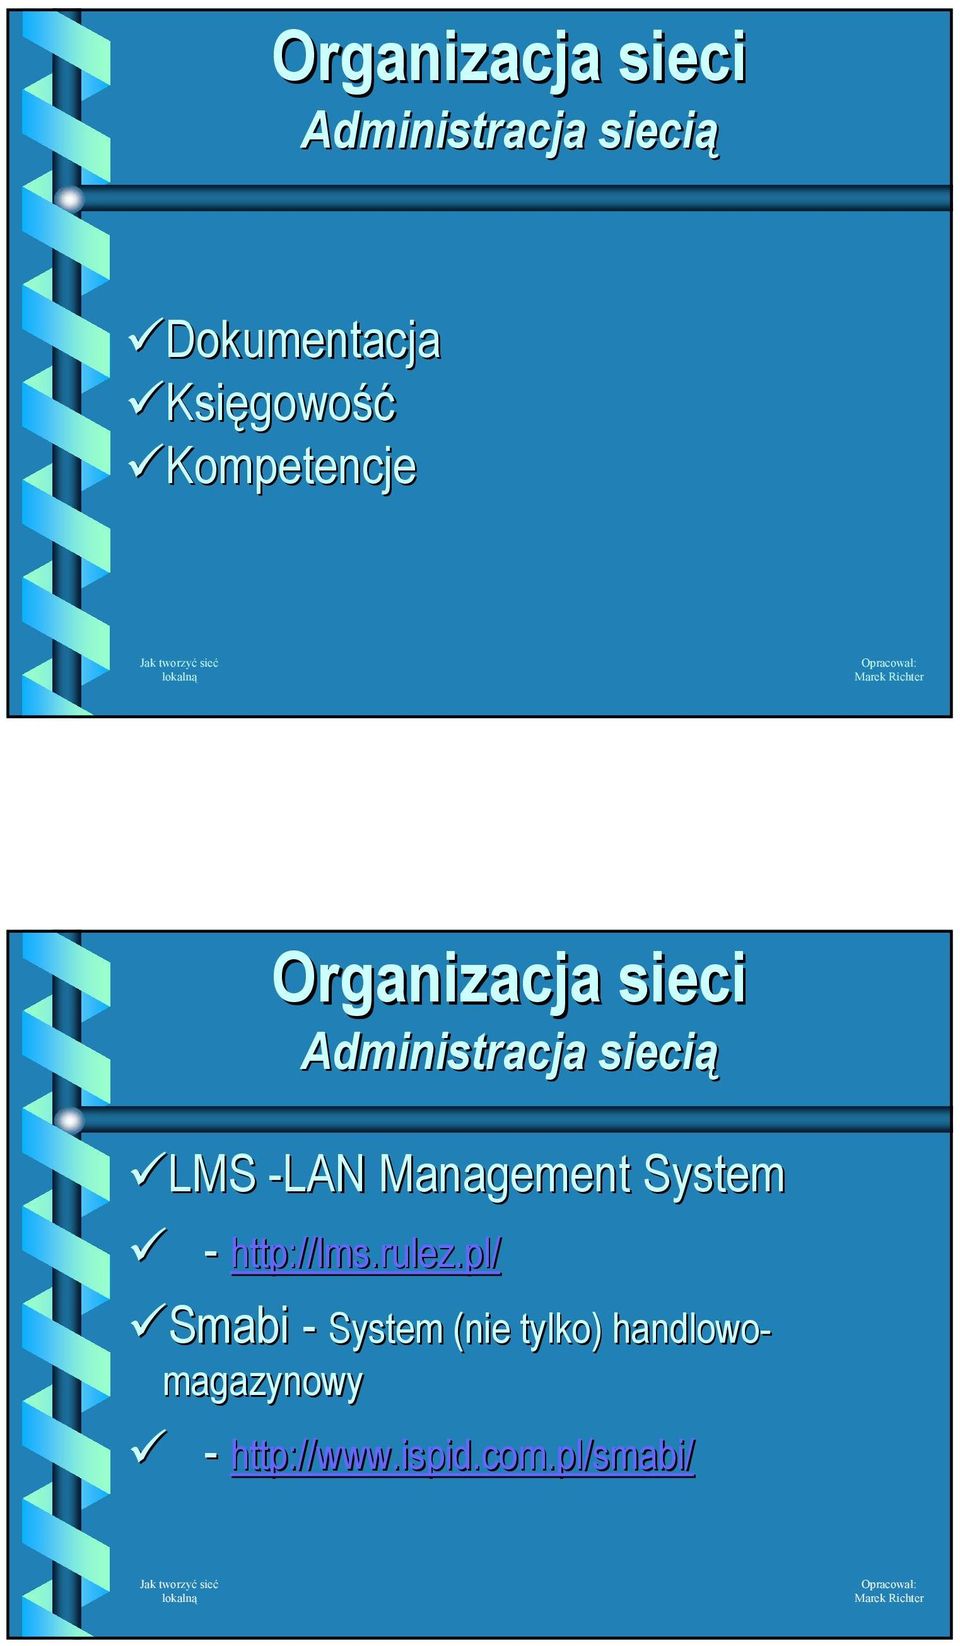 Management System - http://lms.rulez.